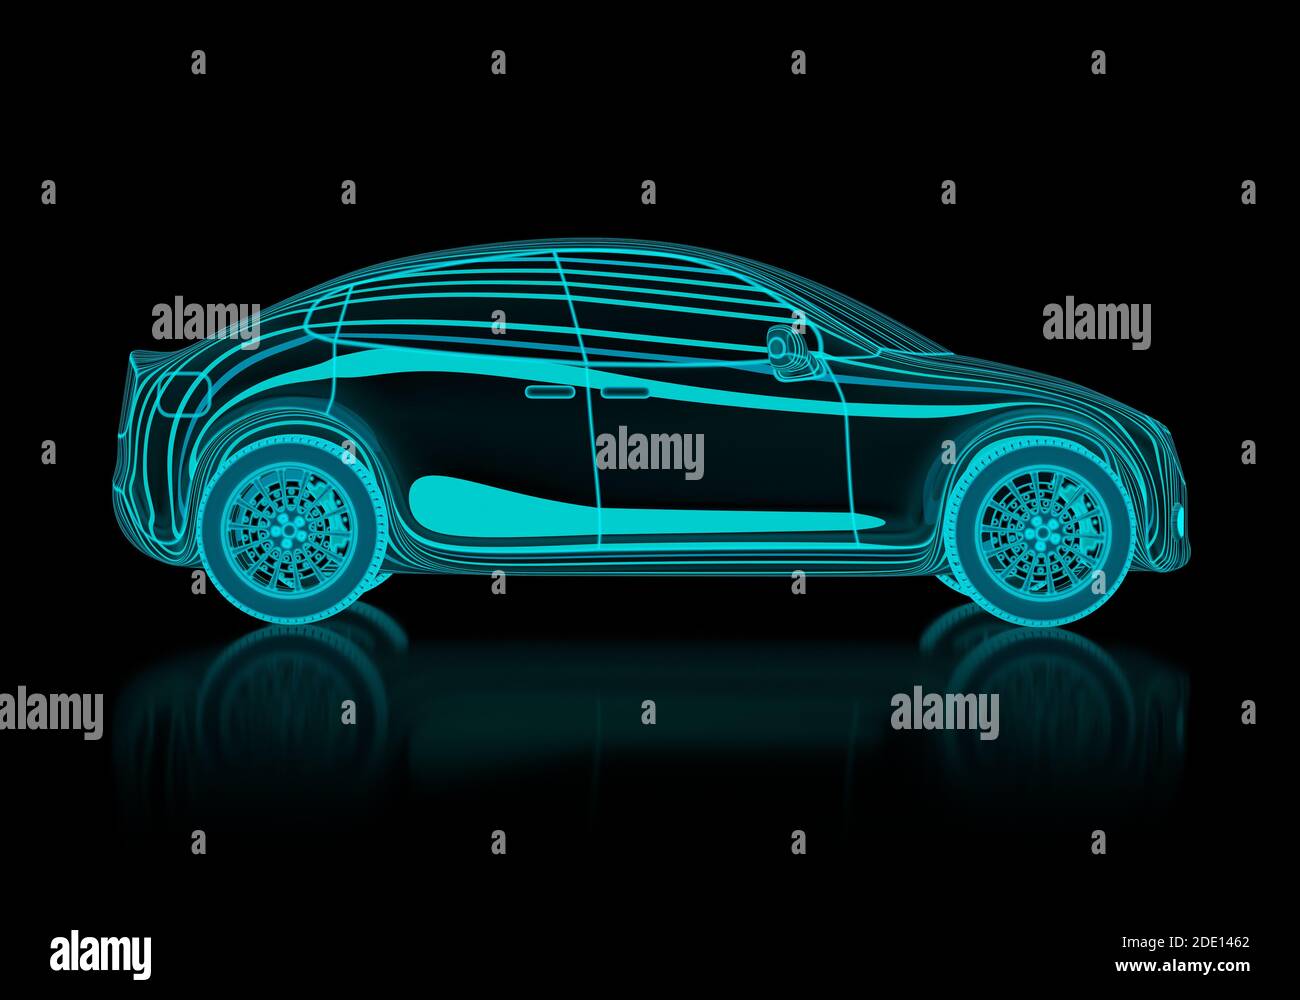 Digital model of a car, illustration Stock Photo